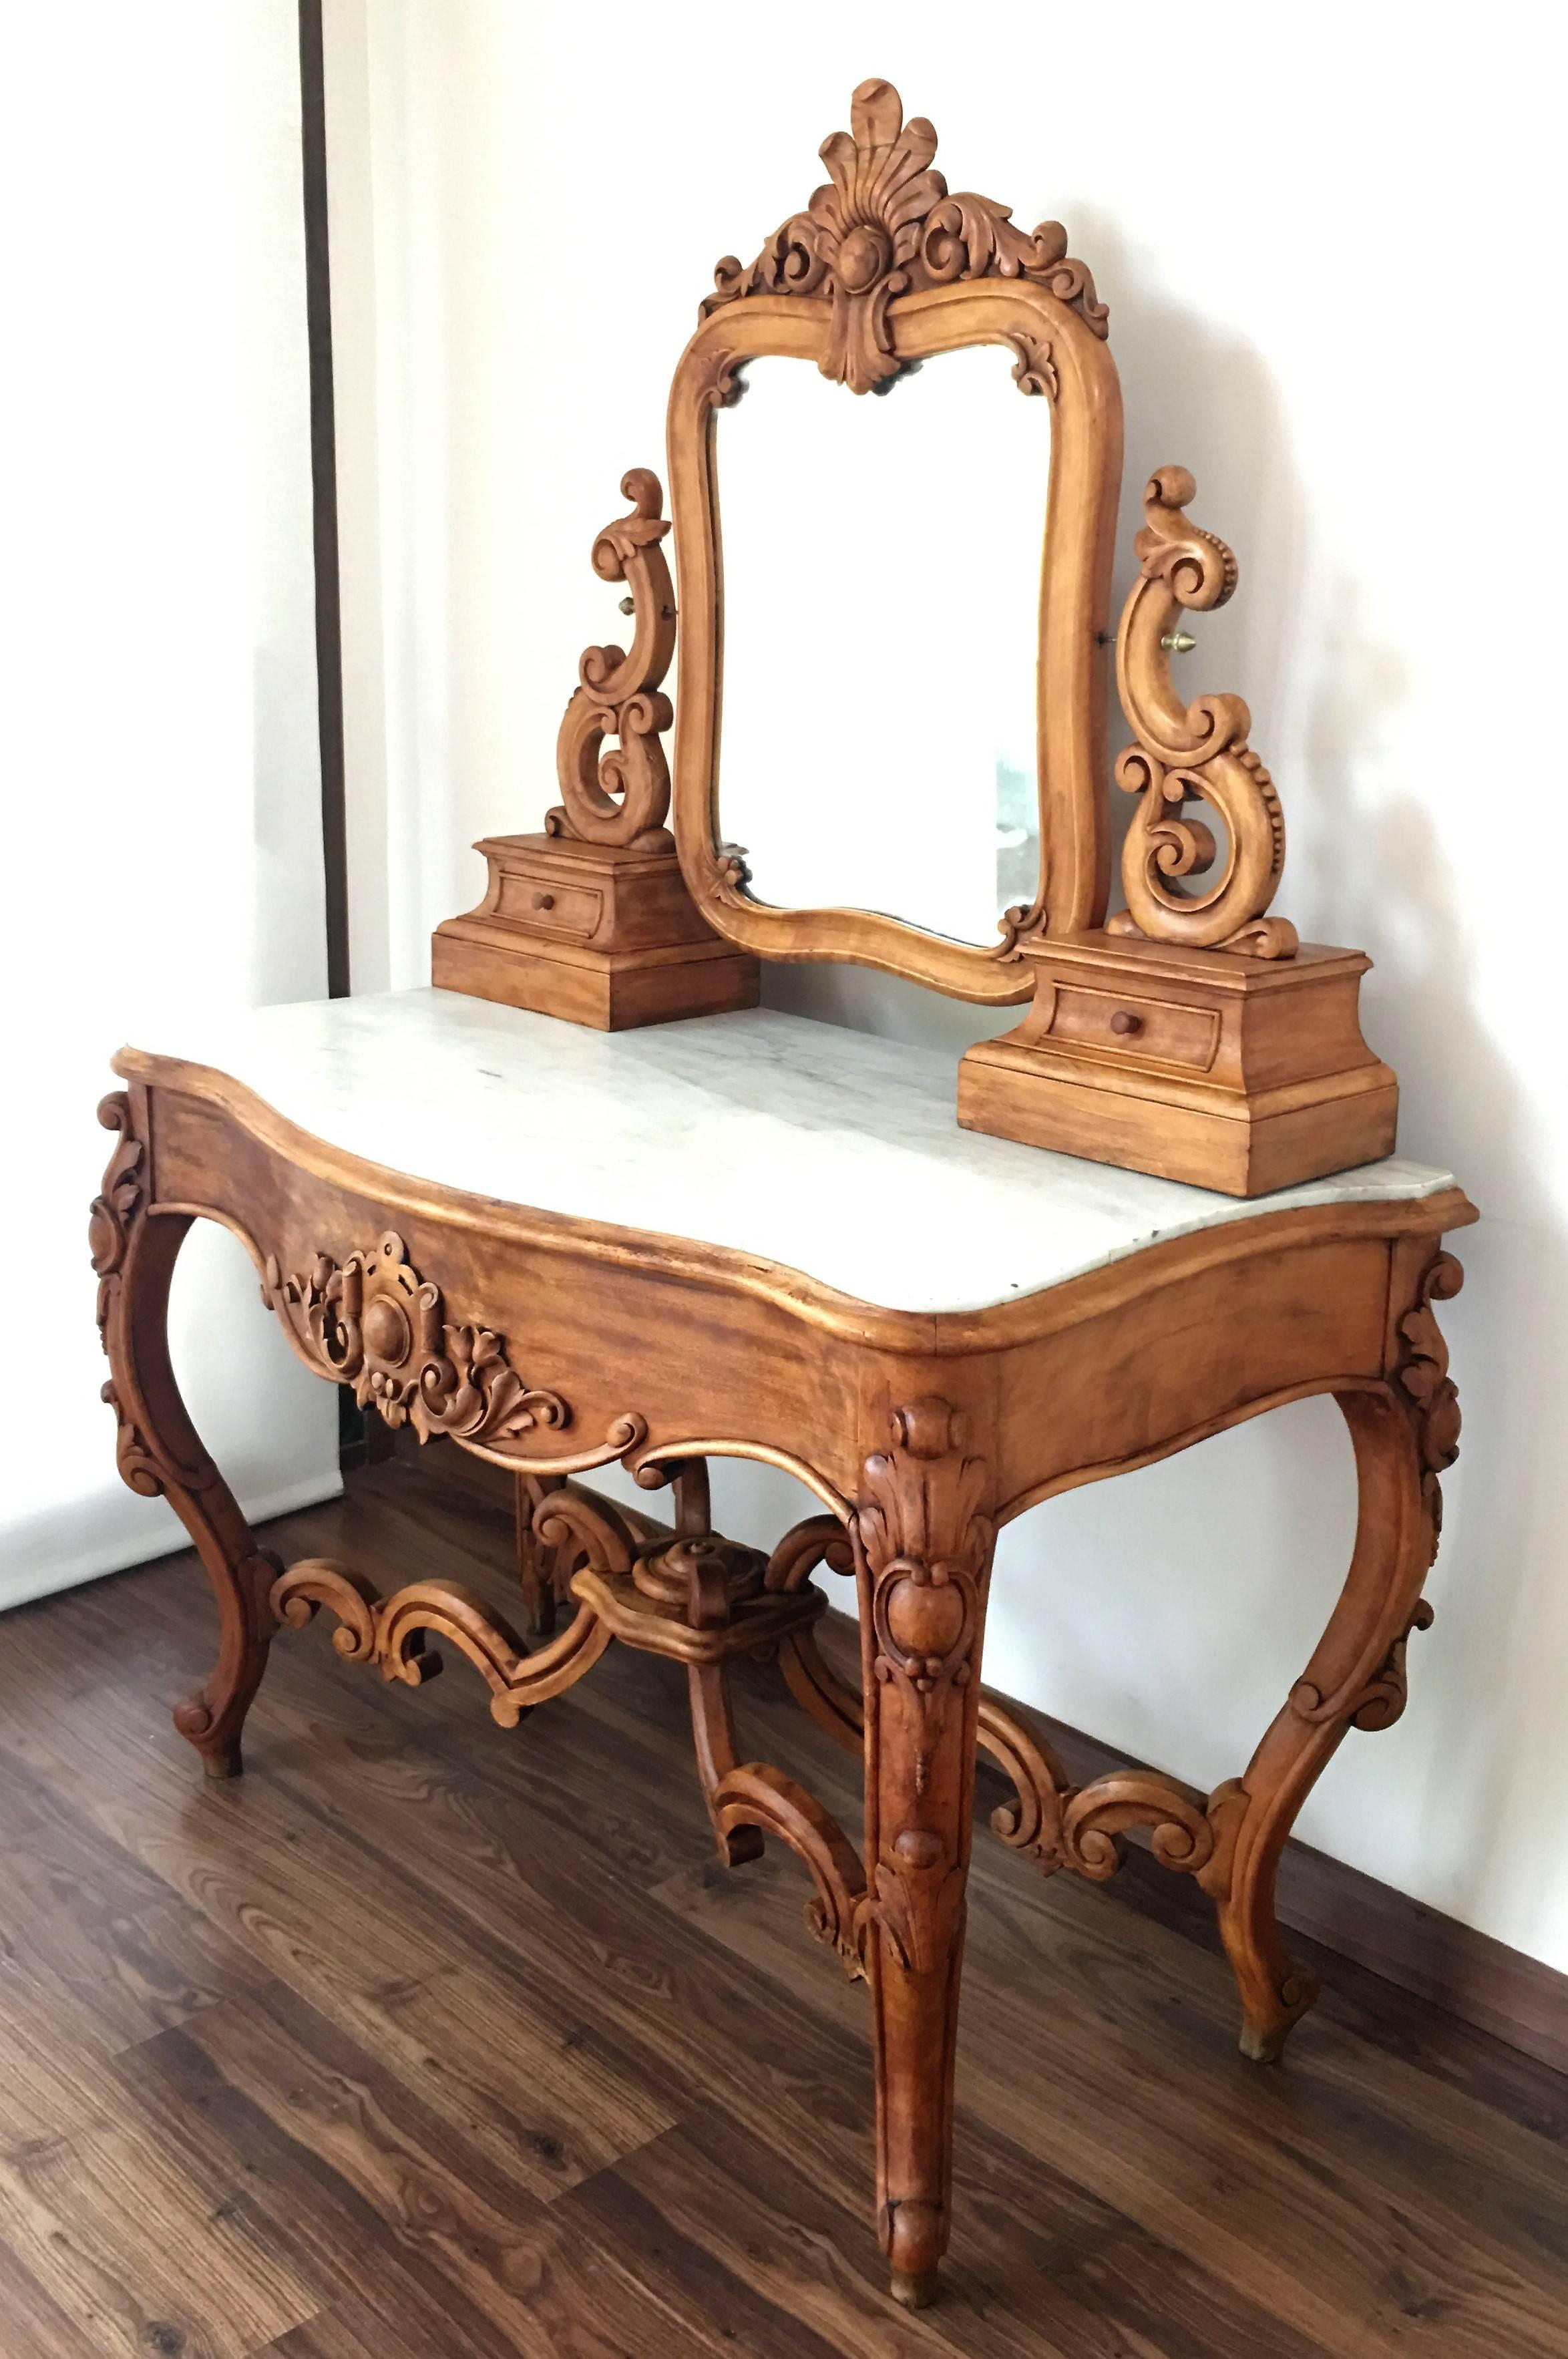 Victorian Mahogany vanity or dresser table

